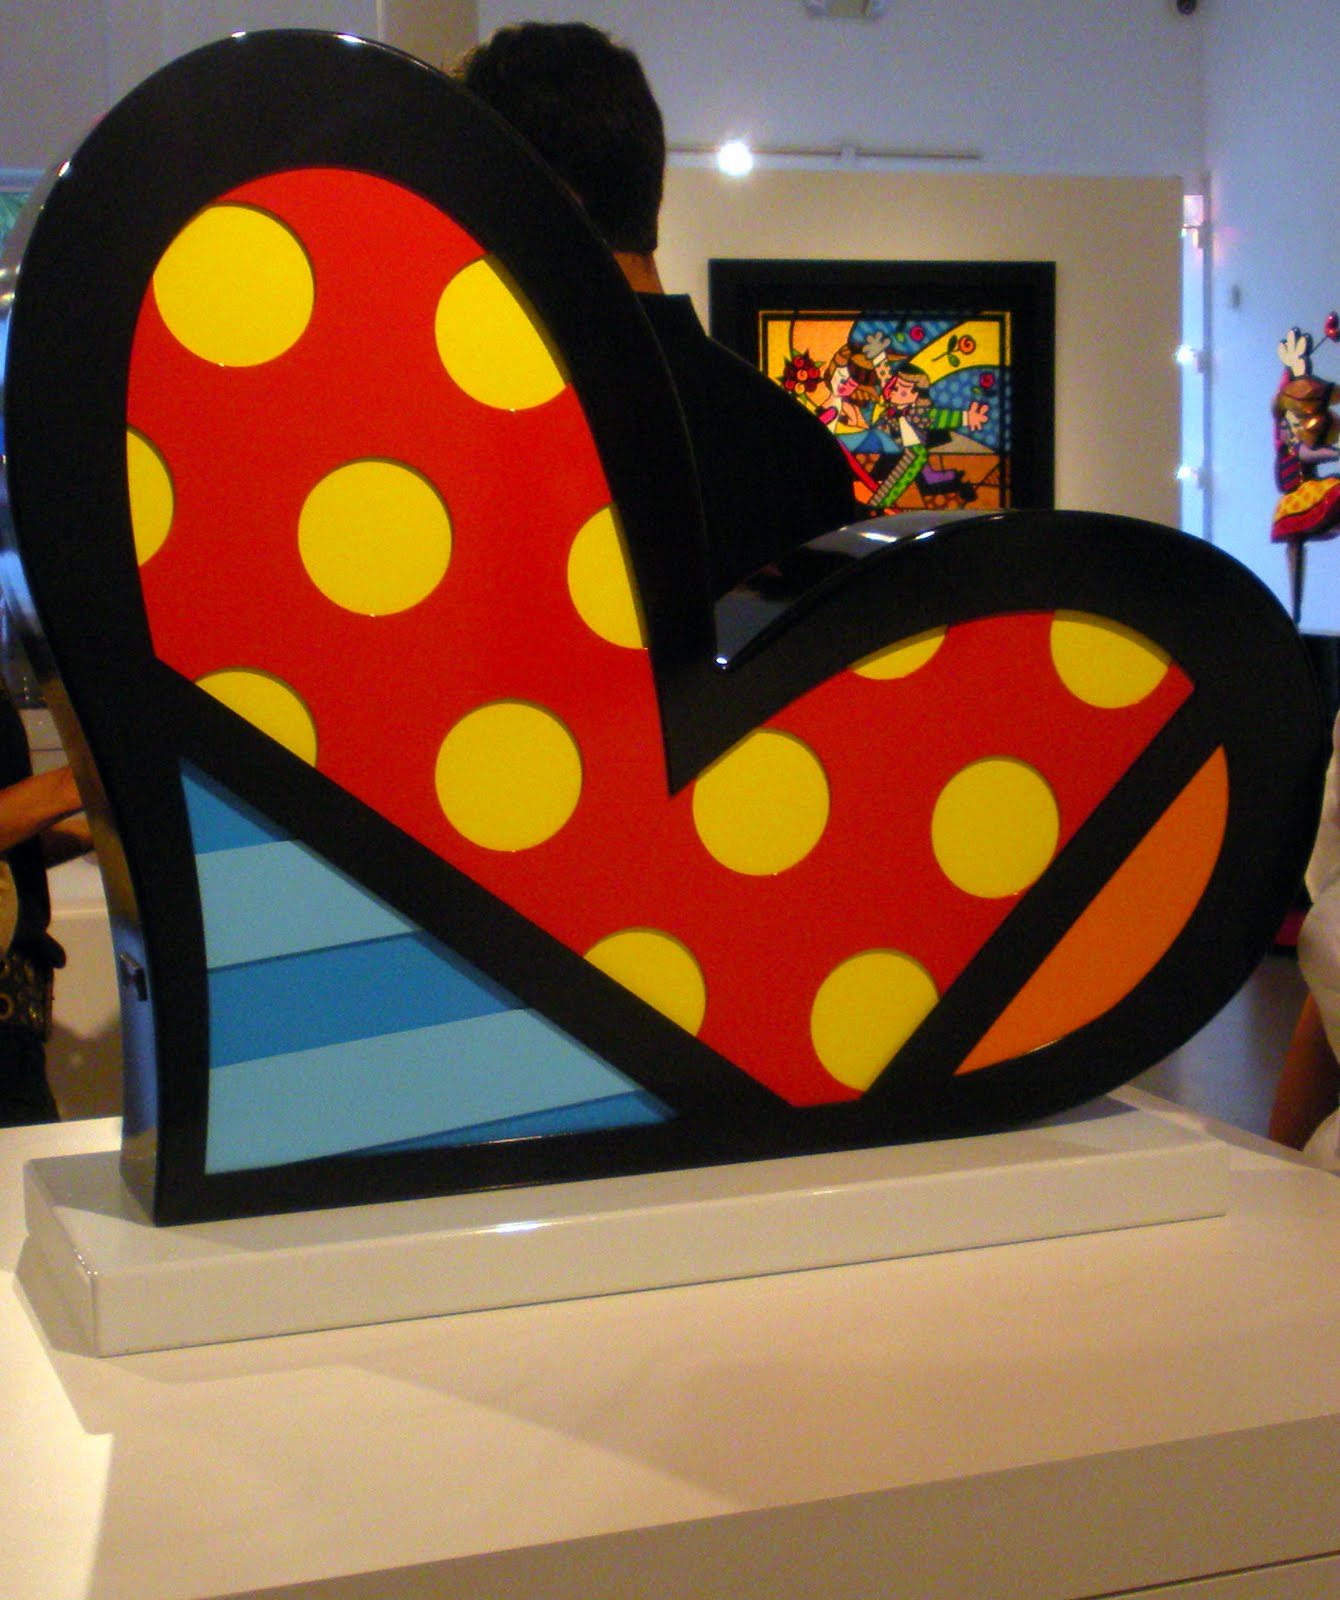 http://2.bp.blogspot.com/_A2HP1m0qpoQ/TGn9Prk8YgI/AAAAAAAABBw/l2sXPIAweNY/s1600/Britto+Heart+Sculpture.jpg